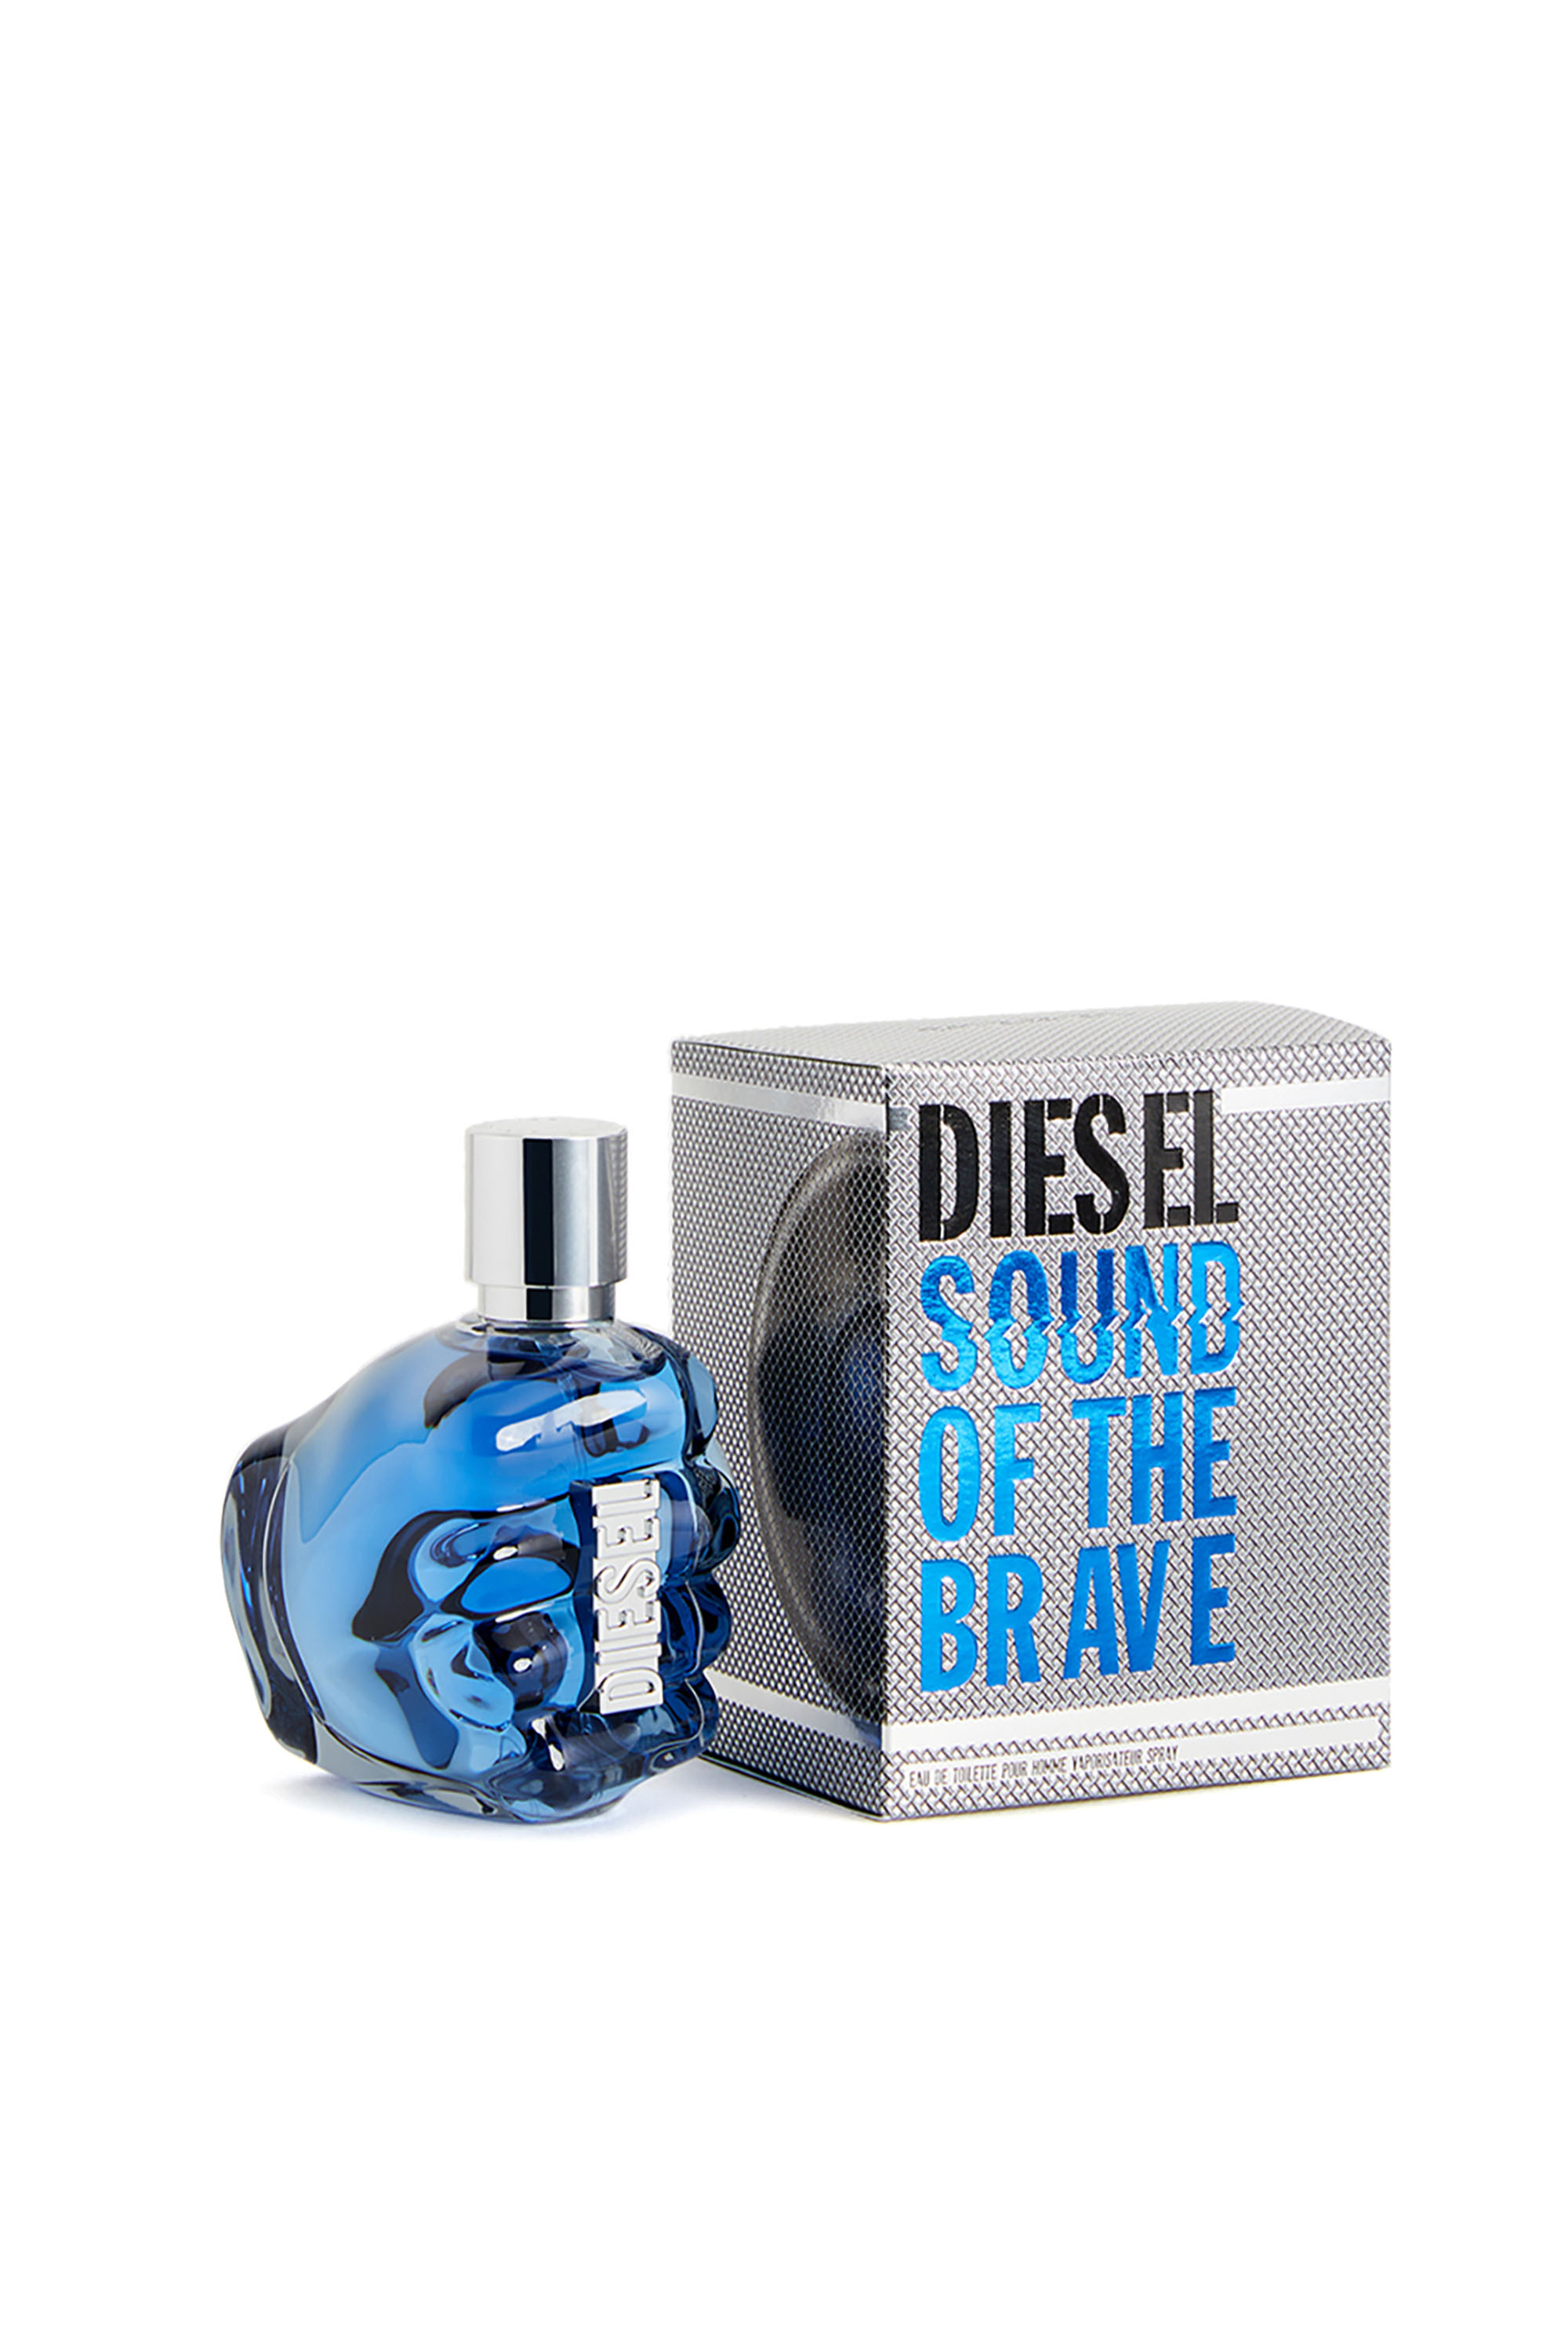 Diesel - SOUND OF THE BRAVE 50 ML,  - Image 3